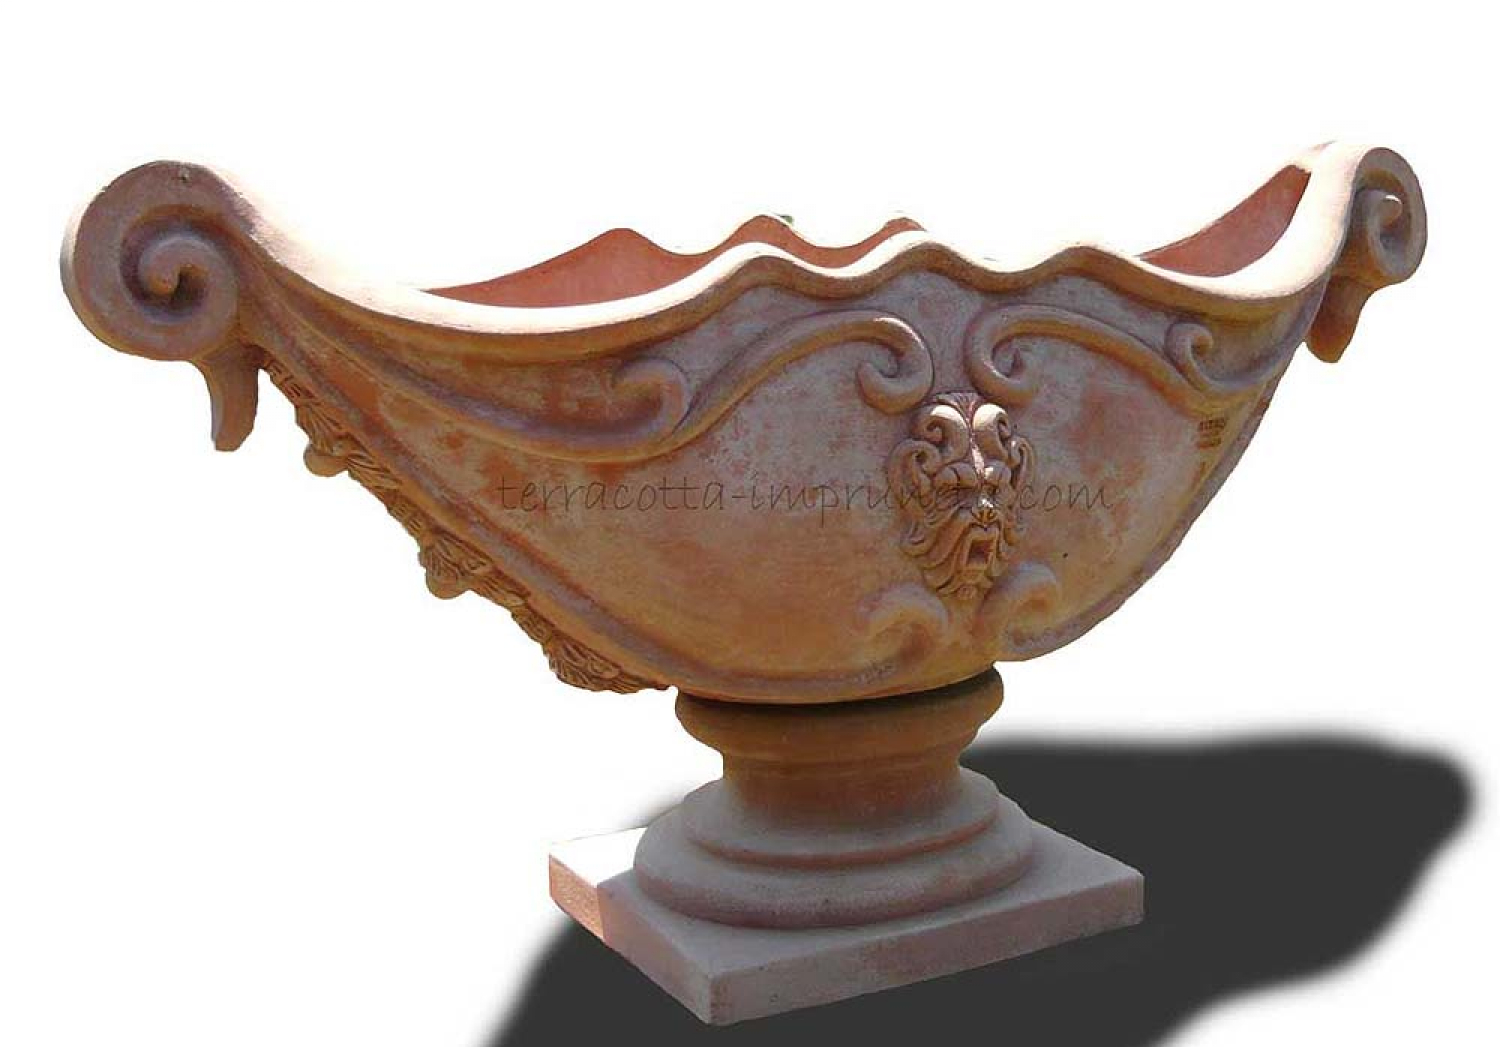 Ovaler Terracotta-Pokal